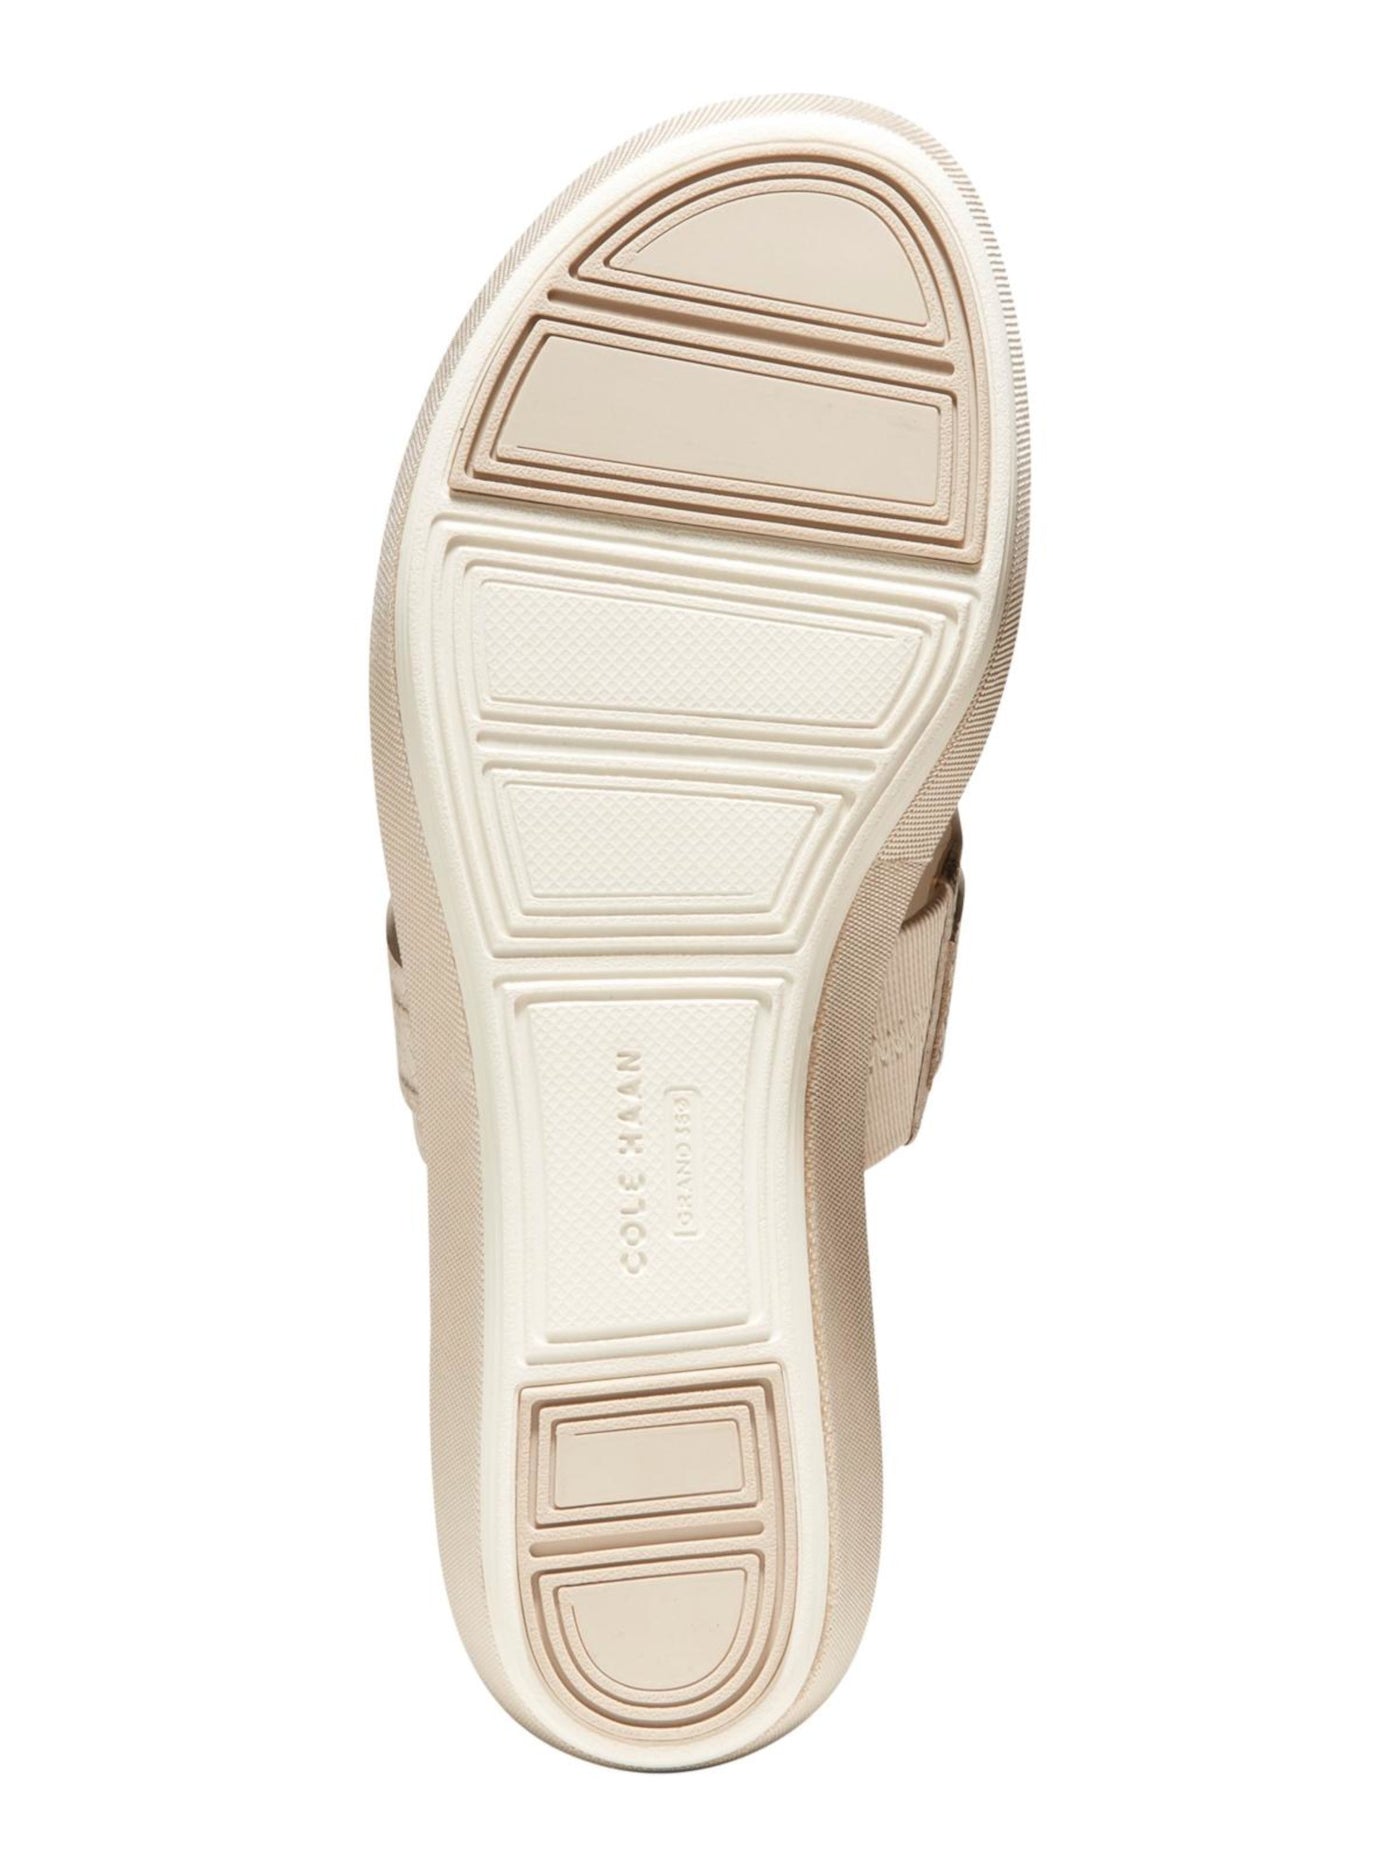 COLE HAAN Womens Beige Snakeskin 1-1/2" Platform Hardware Embellishment Comfort Slip Resistant Breathable Original Grand Flatform Round Toe Wedge Slip On Leather Thong Sandals Shoes B